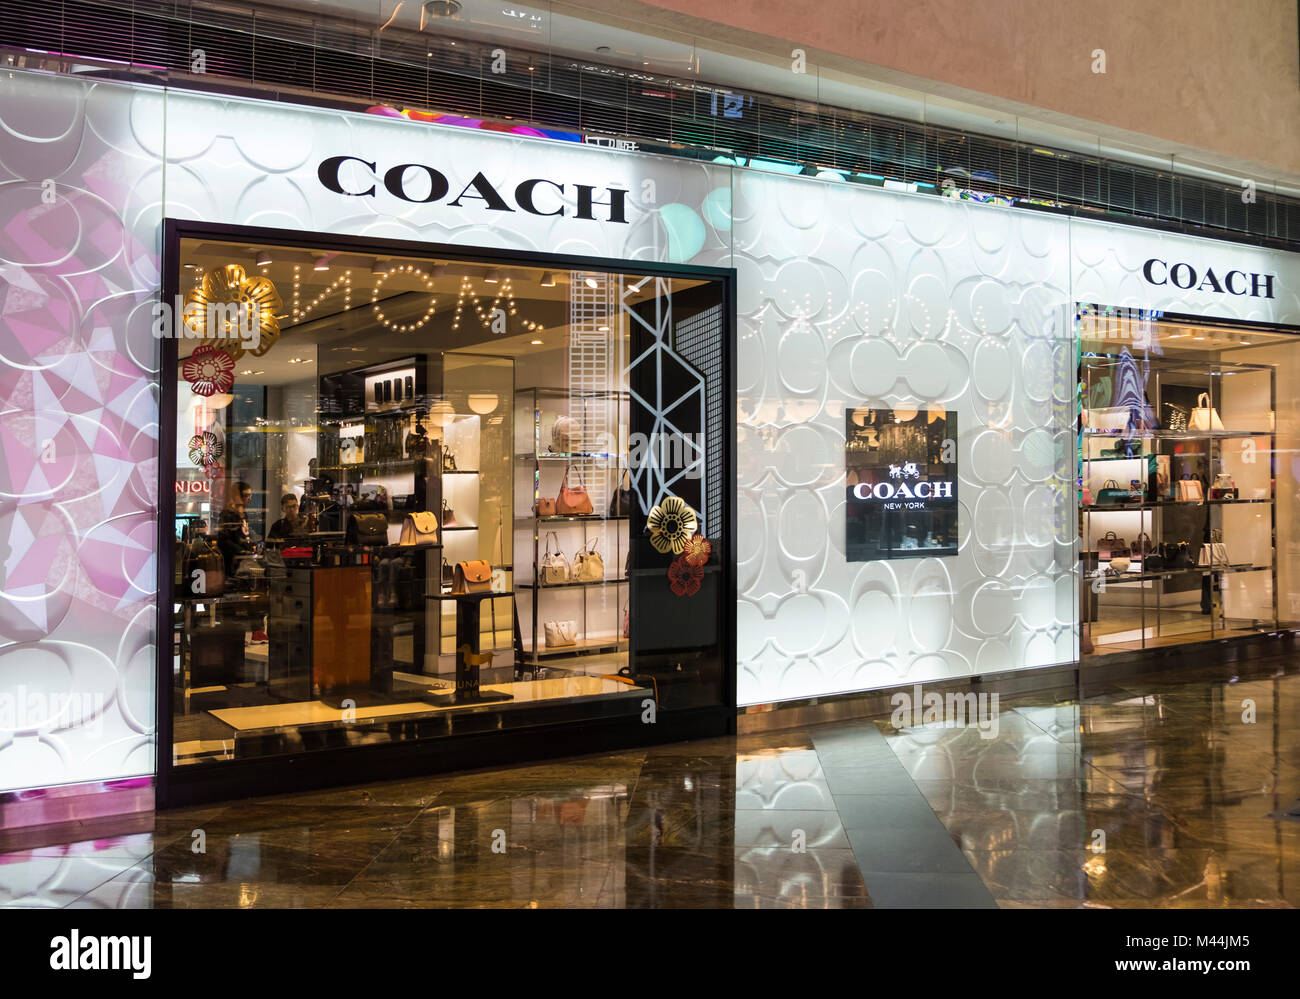 Hong Kong - February 11, 2018: Coach shop in Hong Kong. Coach, Inc. is an multinational luxury fashion company based in New York City. Stock Photo